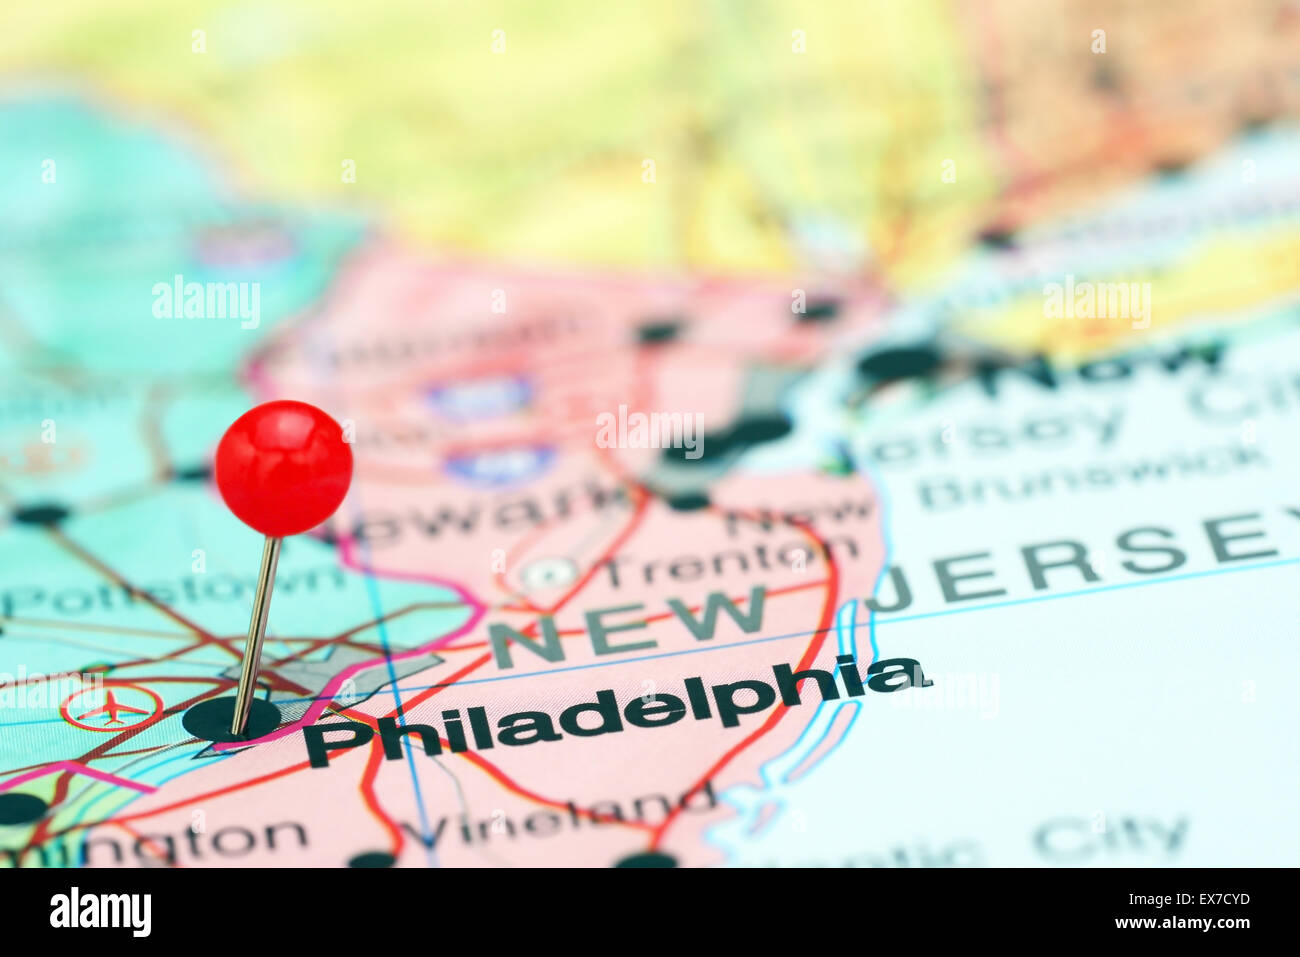 Philadelphia pinned on a map of USA Stock Photo